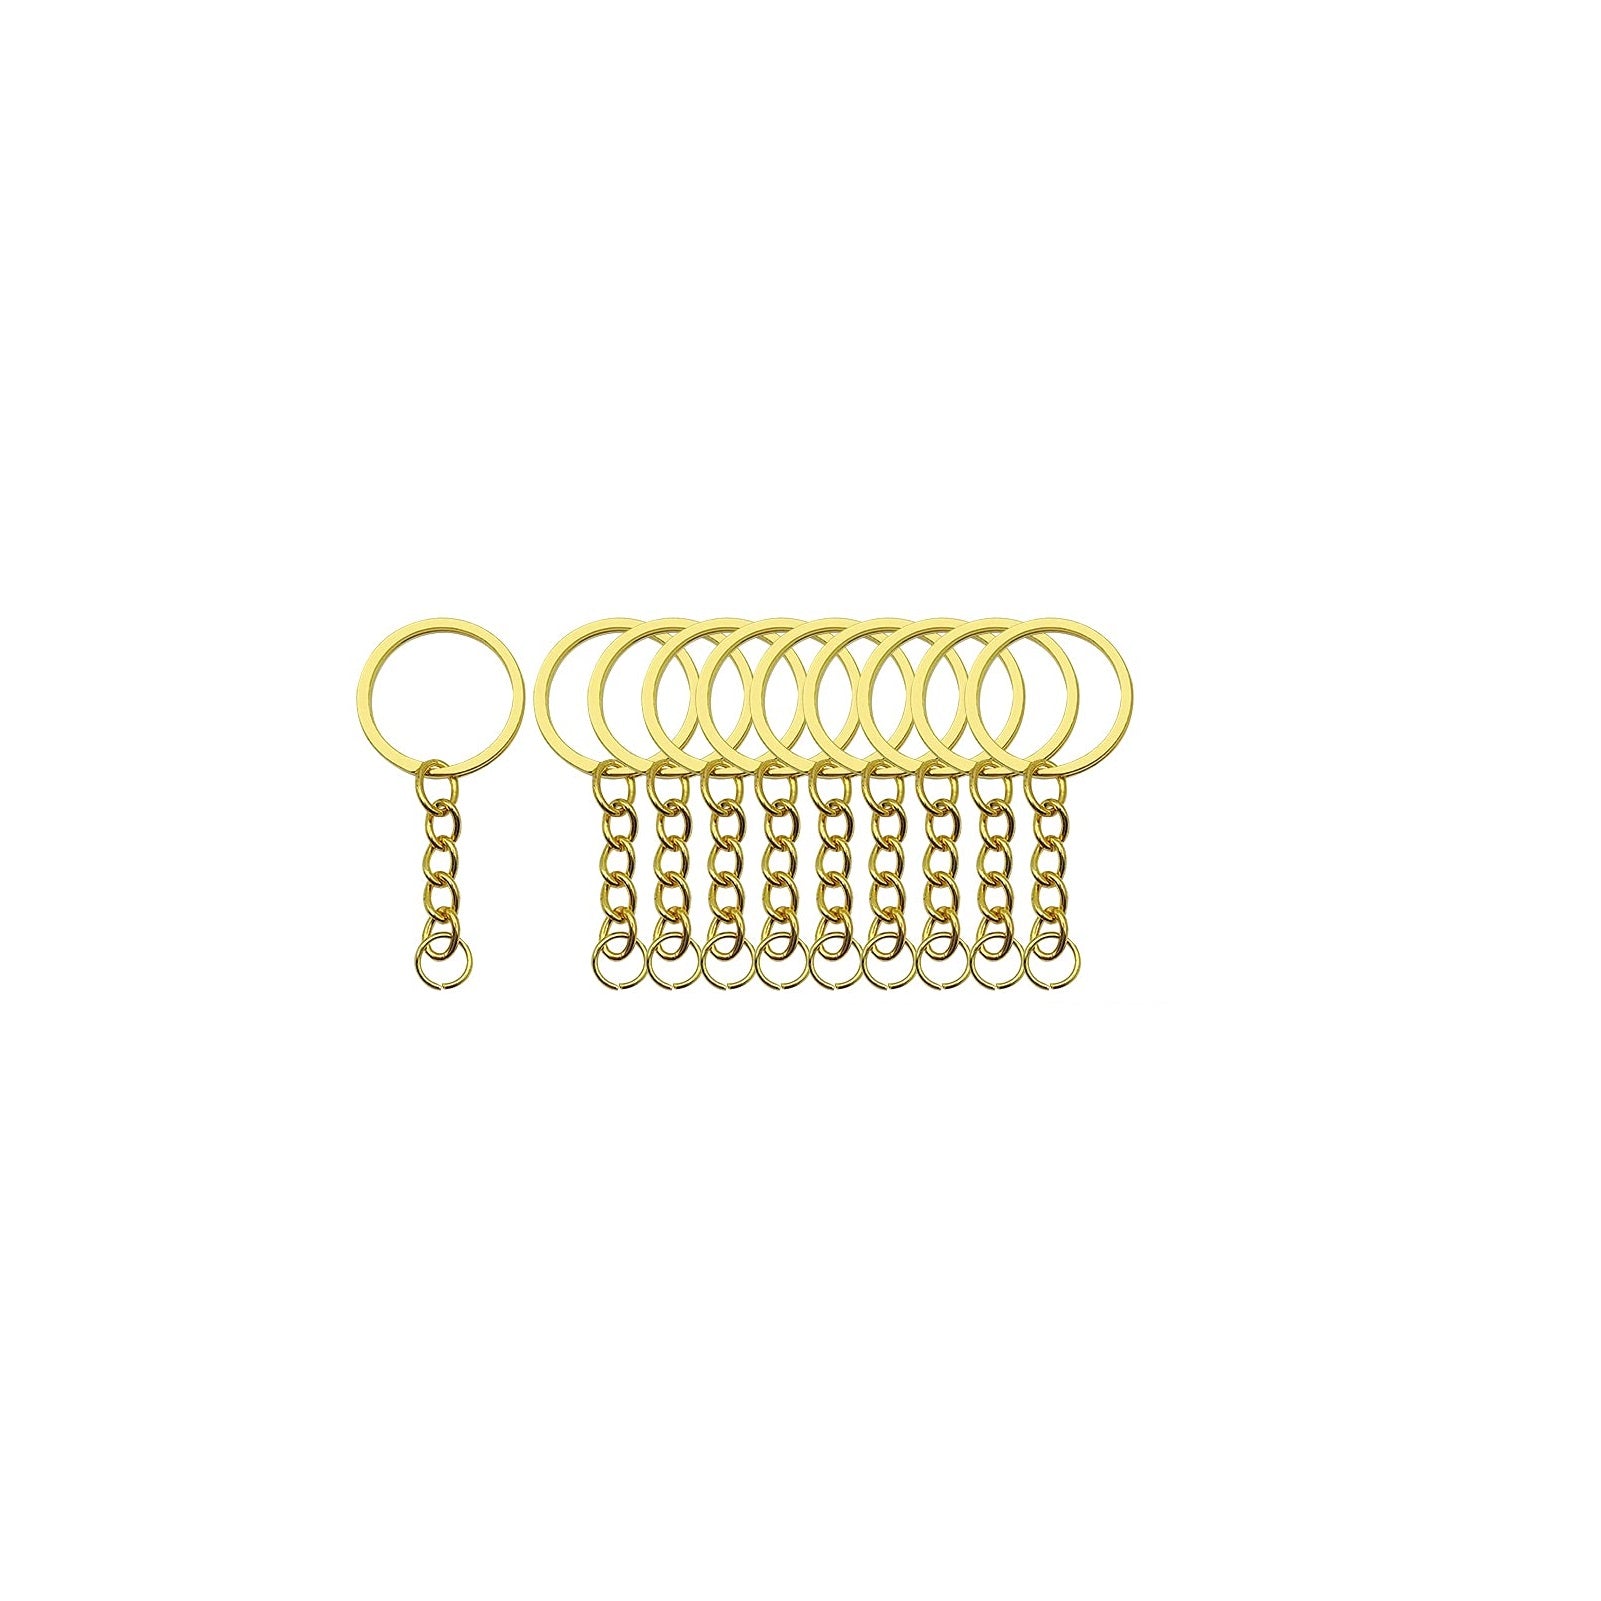 Key Chain Accessories for Keyring DIY Key Holder